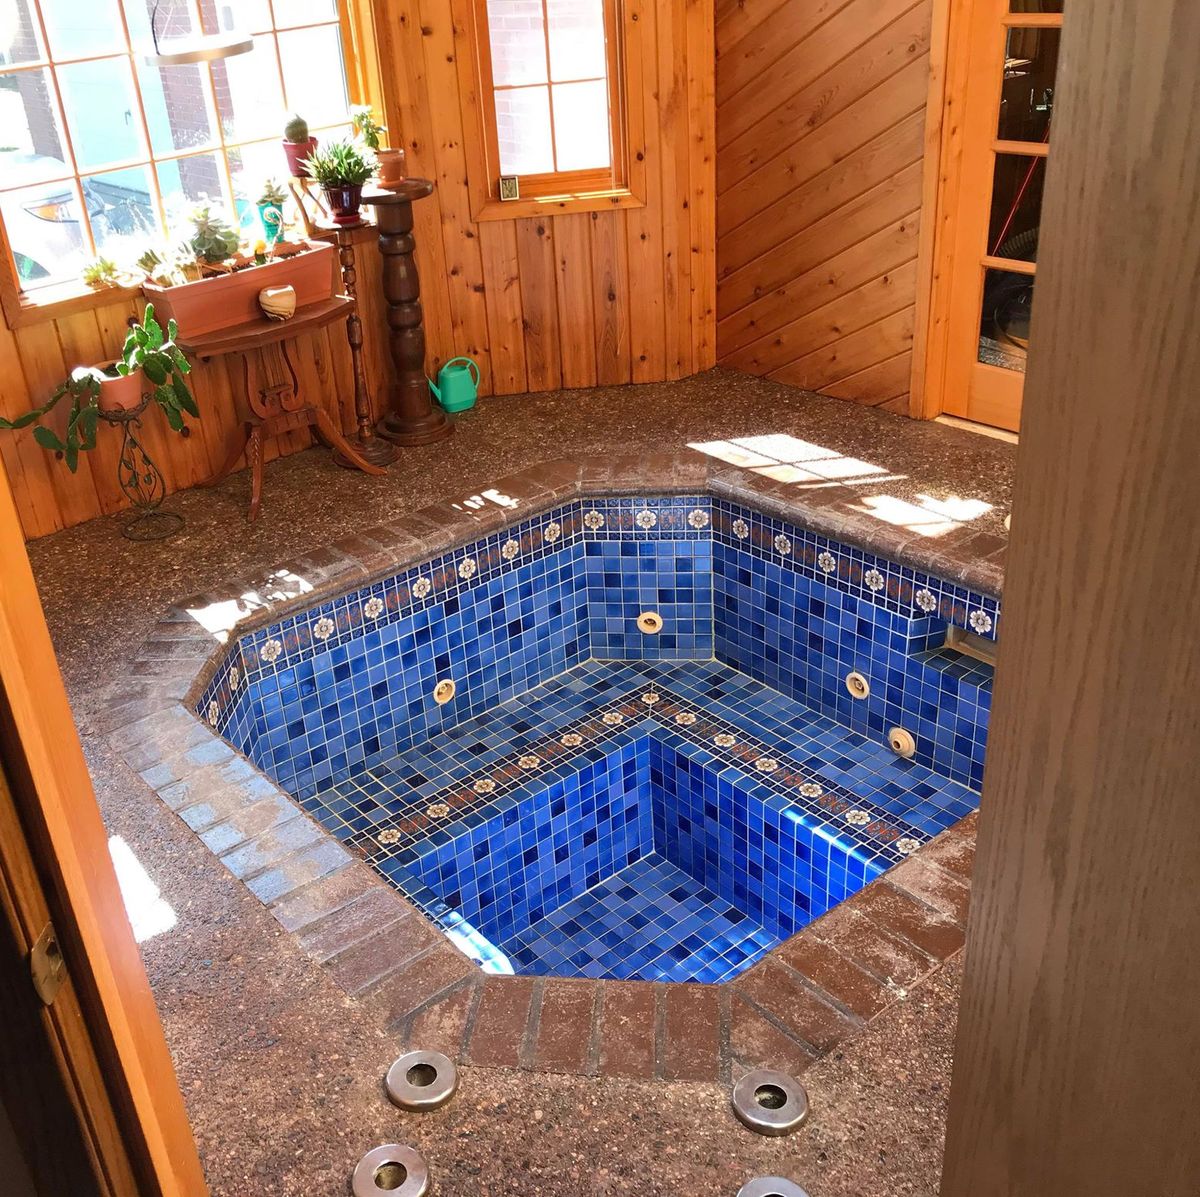 Blue-tiled hot tub inside sunlit room with wood-paneled walls